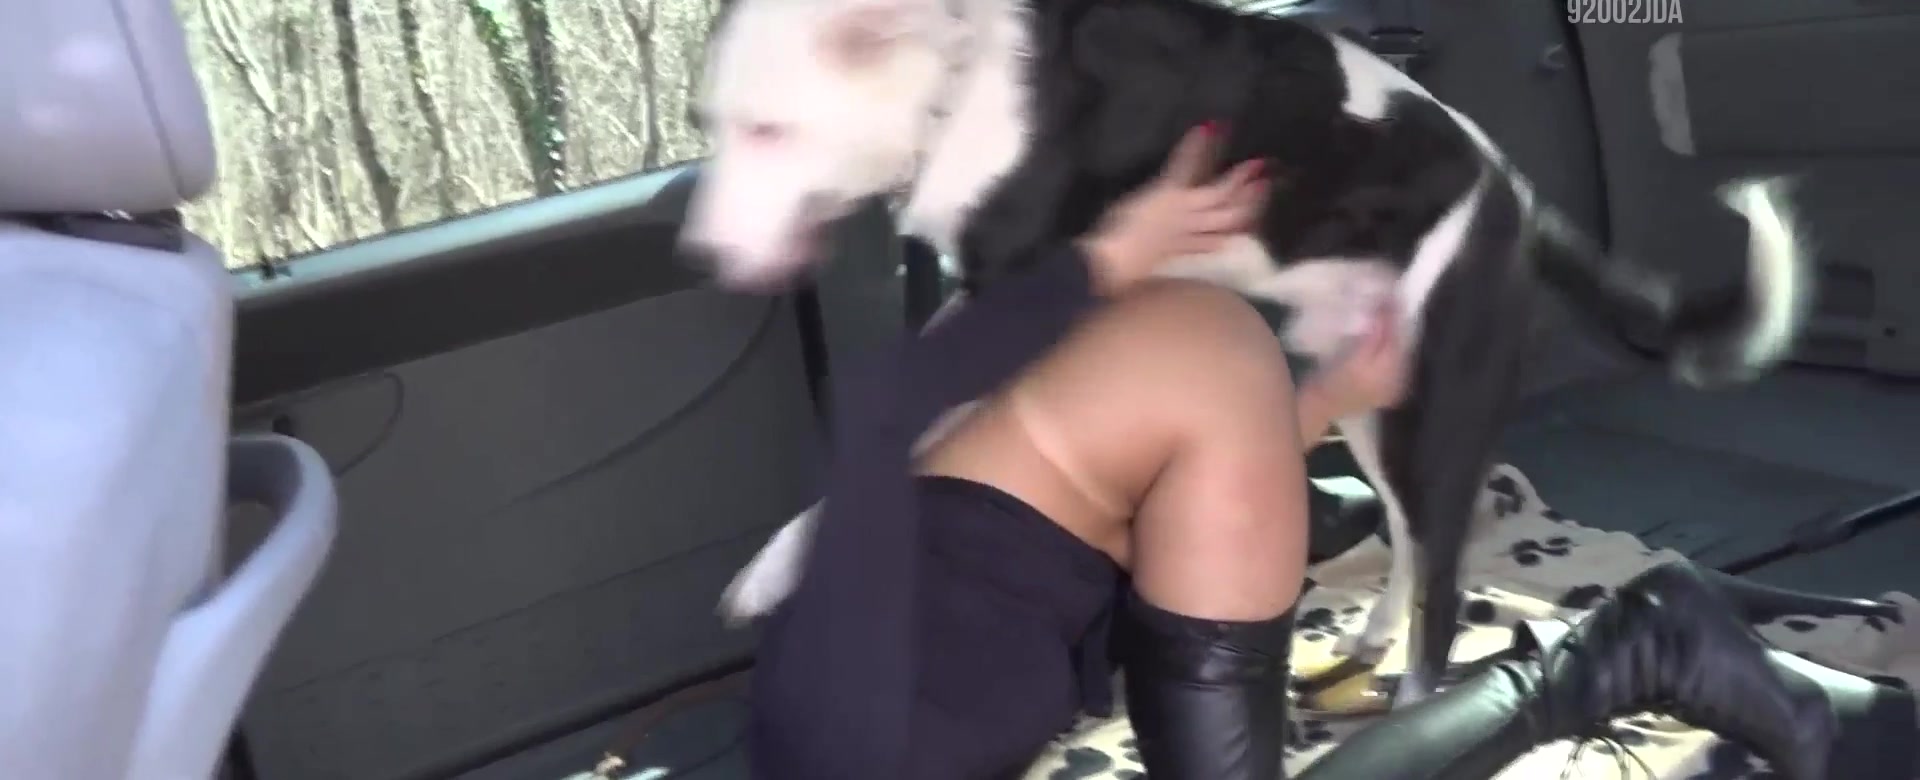 Cachorro comendo a mulher